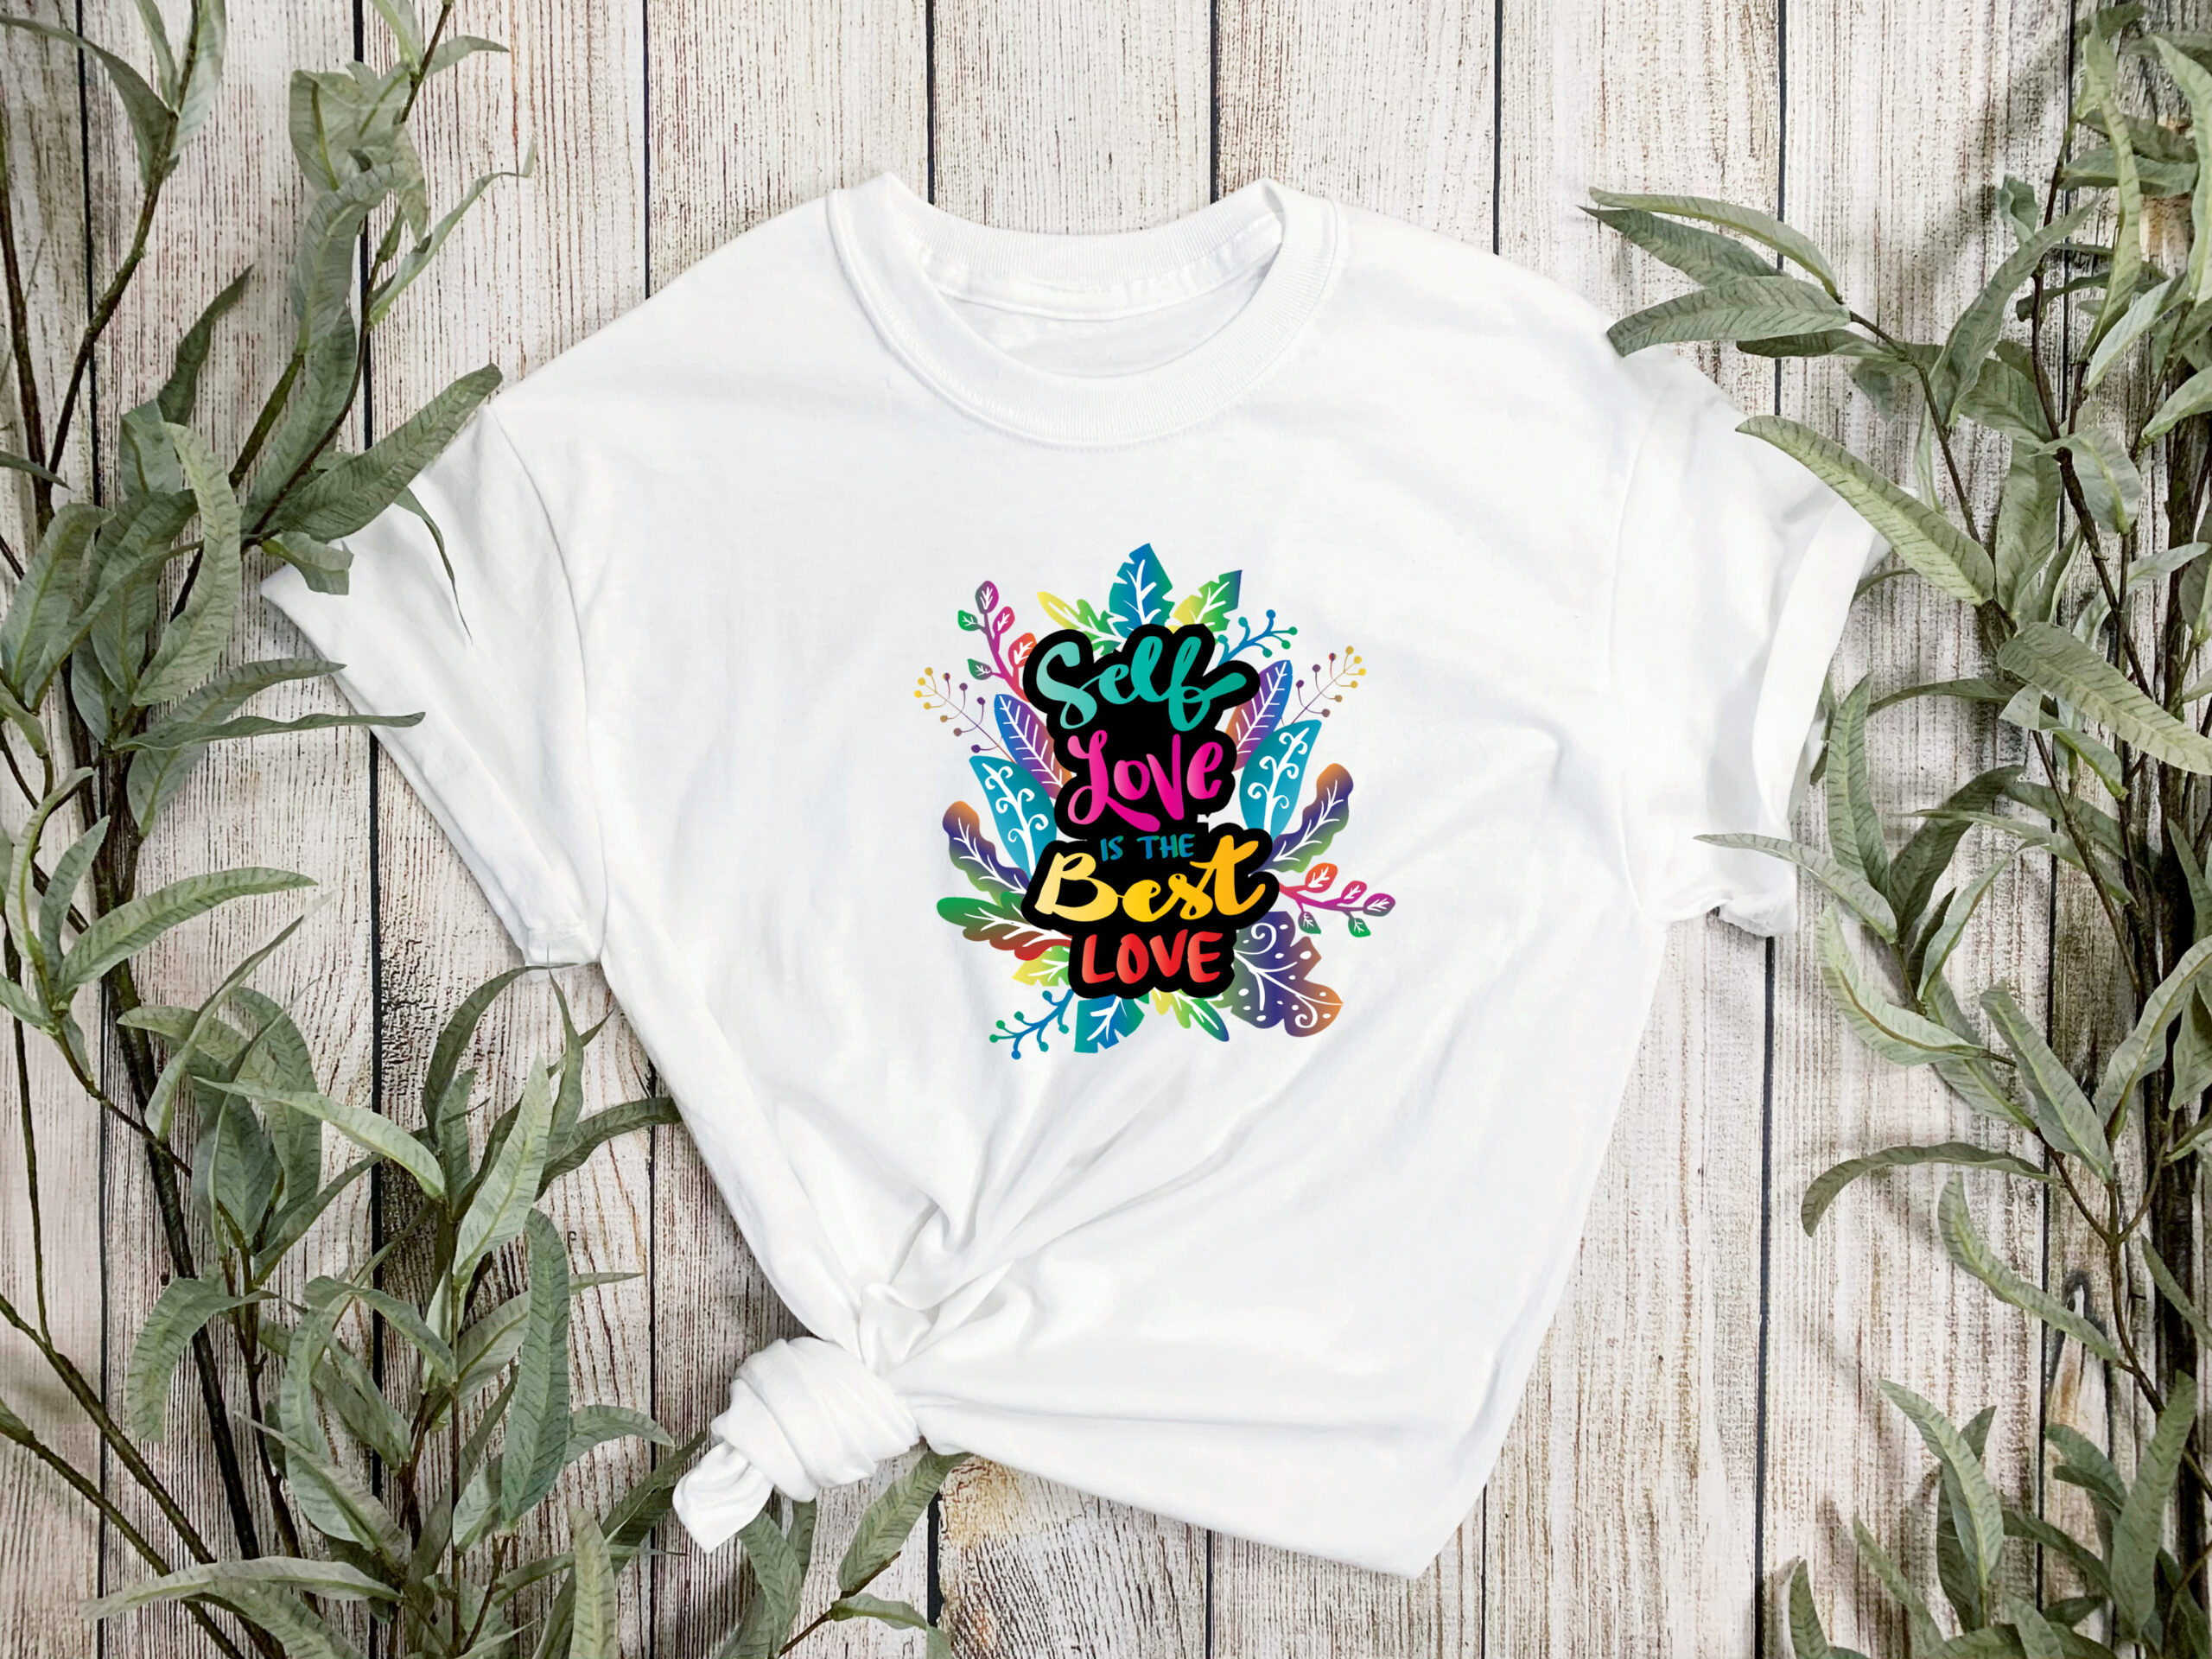 Self Love T-Shirt